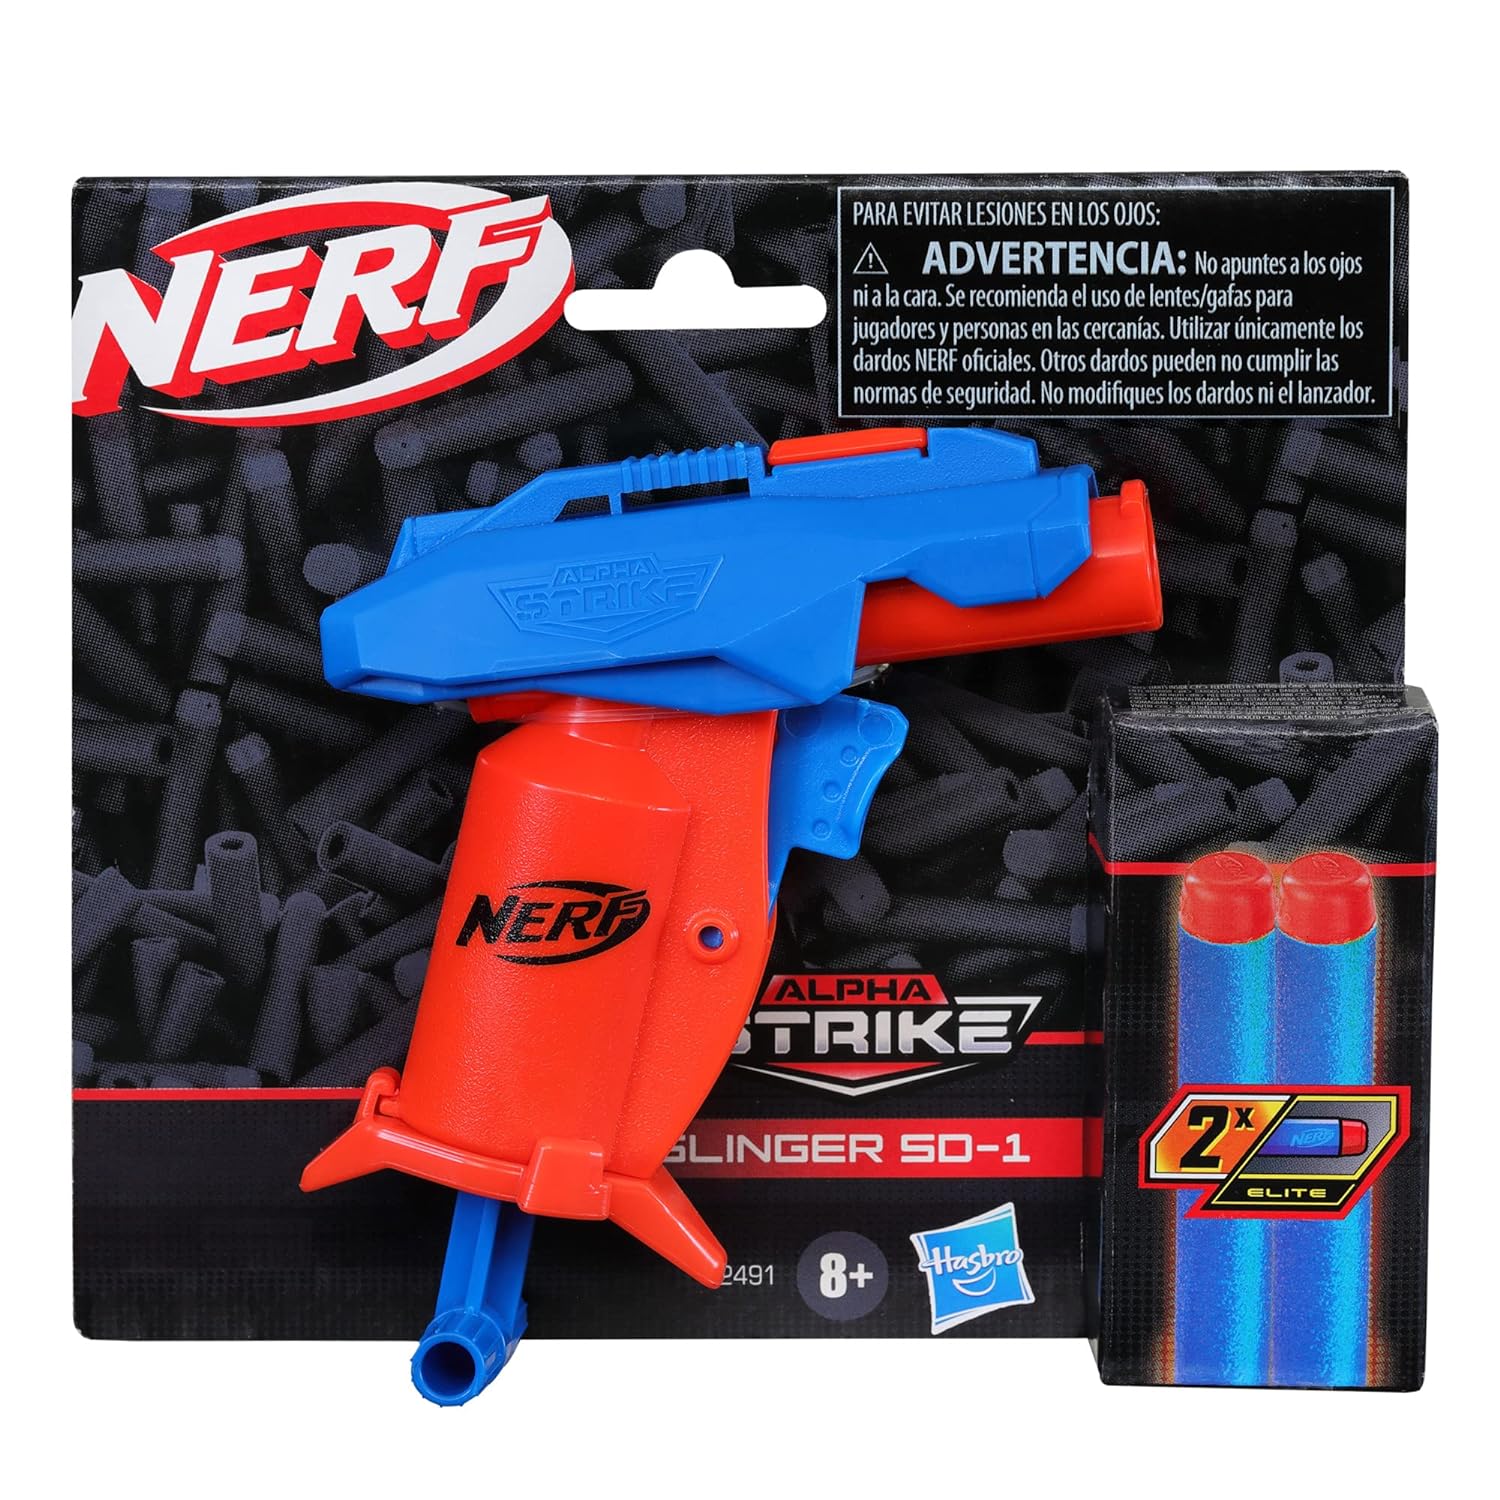 Nerf Alpha Strike Slinger Sd-1 Single-Fire Dart Blaster - Includes 2 Official Nerf Elite Foam Darts, Easy Load Prime Fire,Multicolor